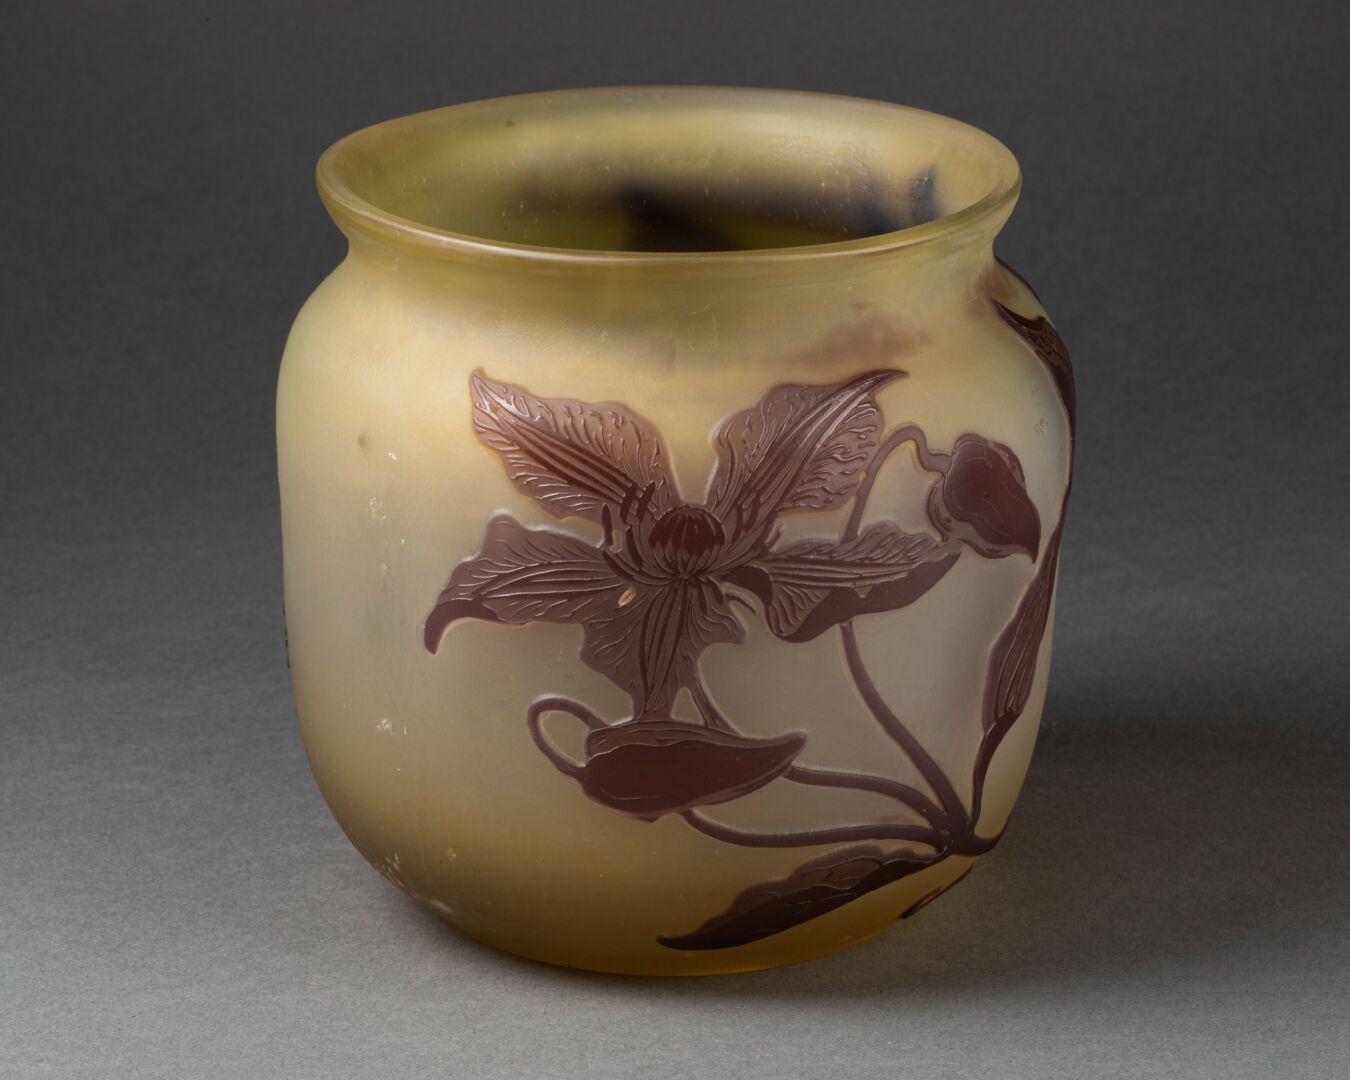 Établissements GALLÉ (1904-1936) 狭长颈部和扁平瓶身的花瓶，装饰有黄色背景上的紫色铁线莲

有色和酸性蚀刻的玻璃

签名为Gal&hellip;